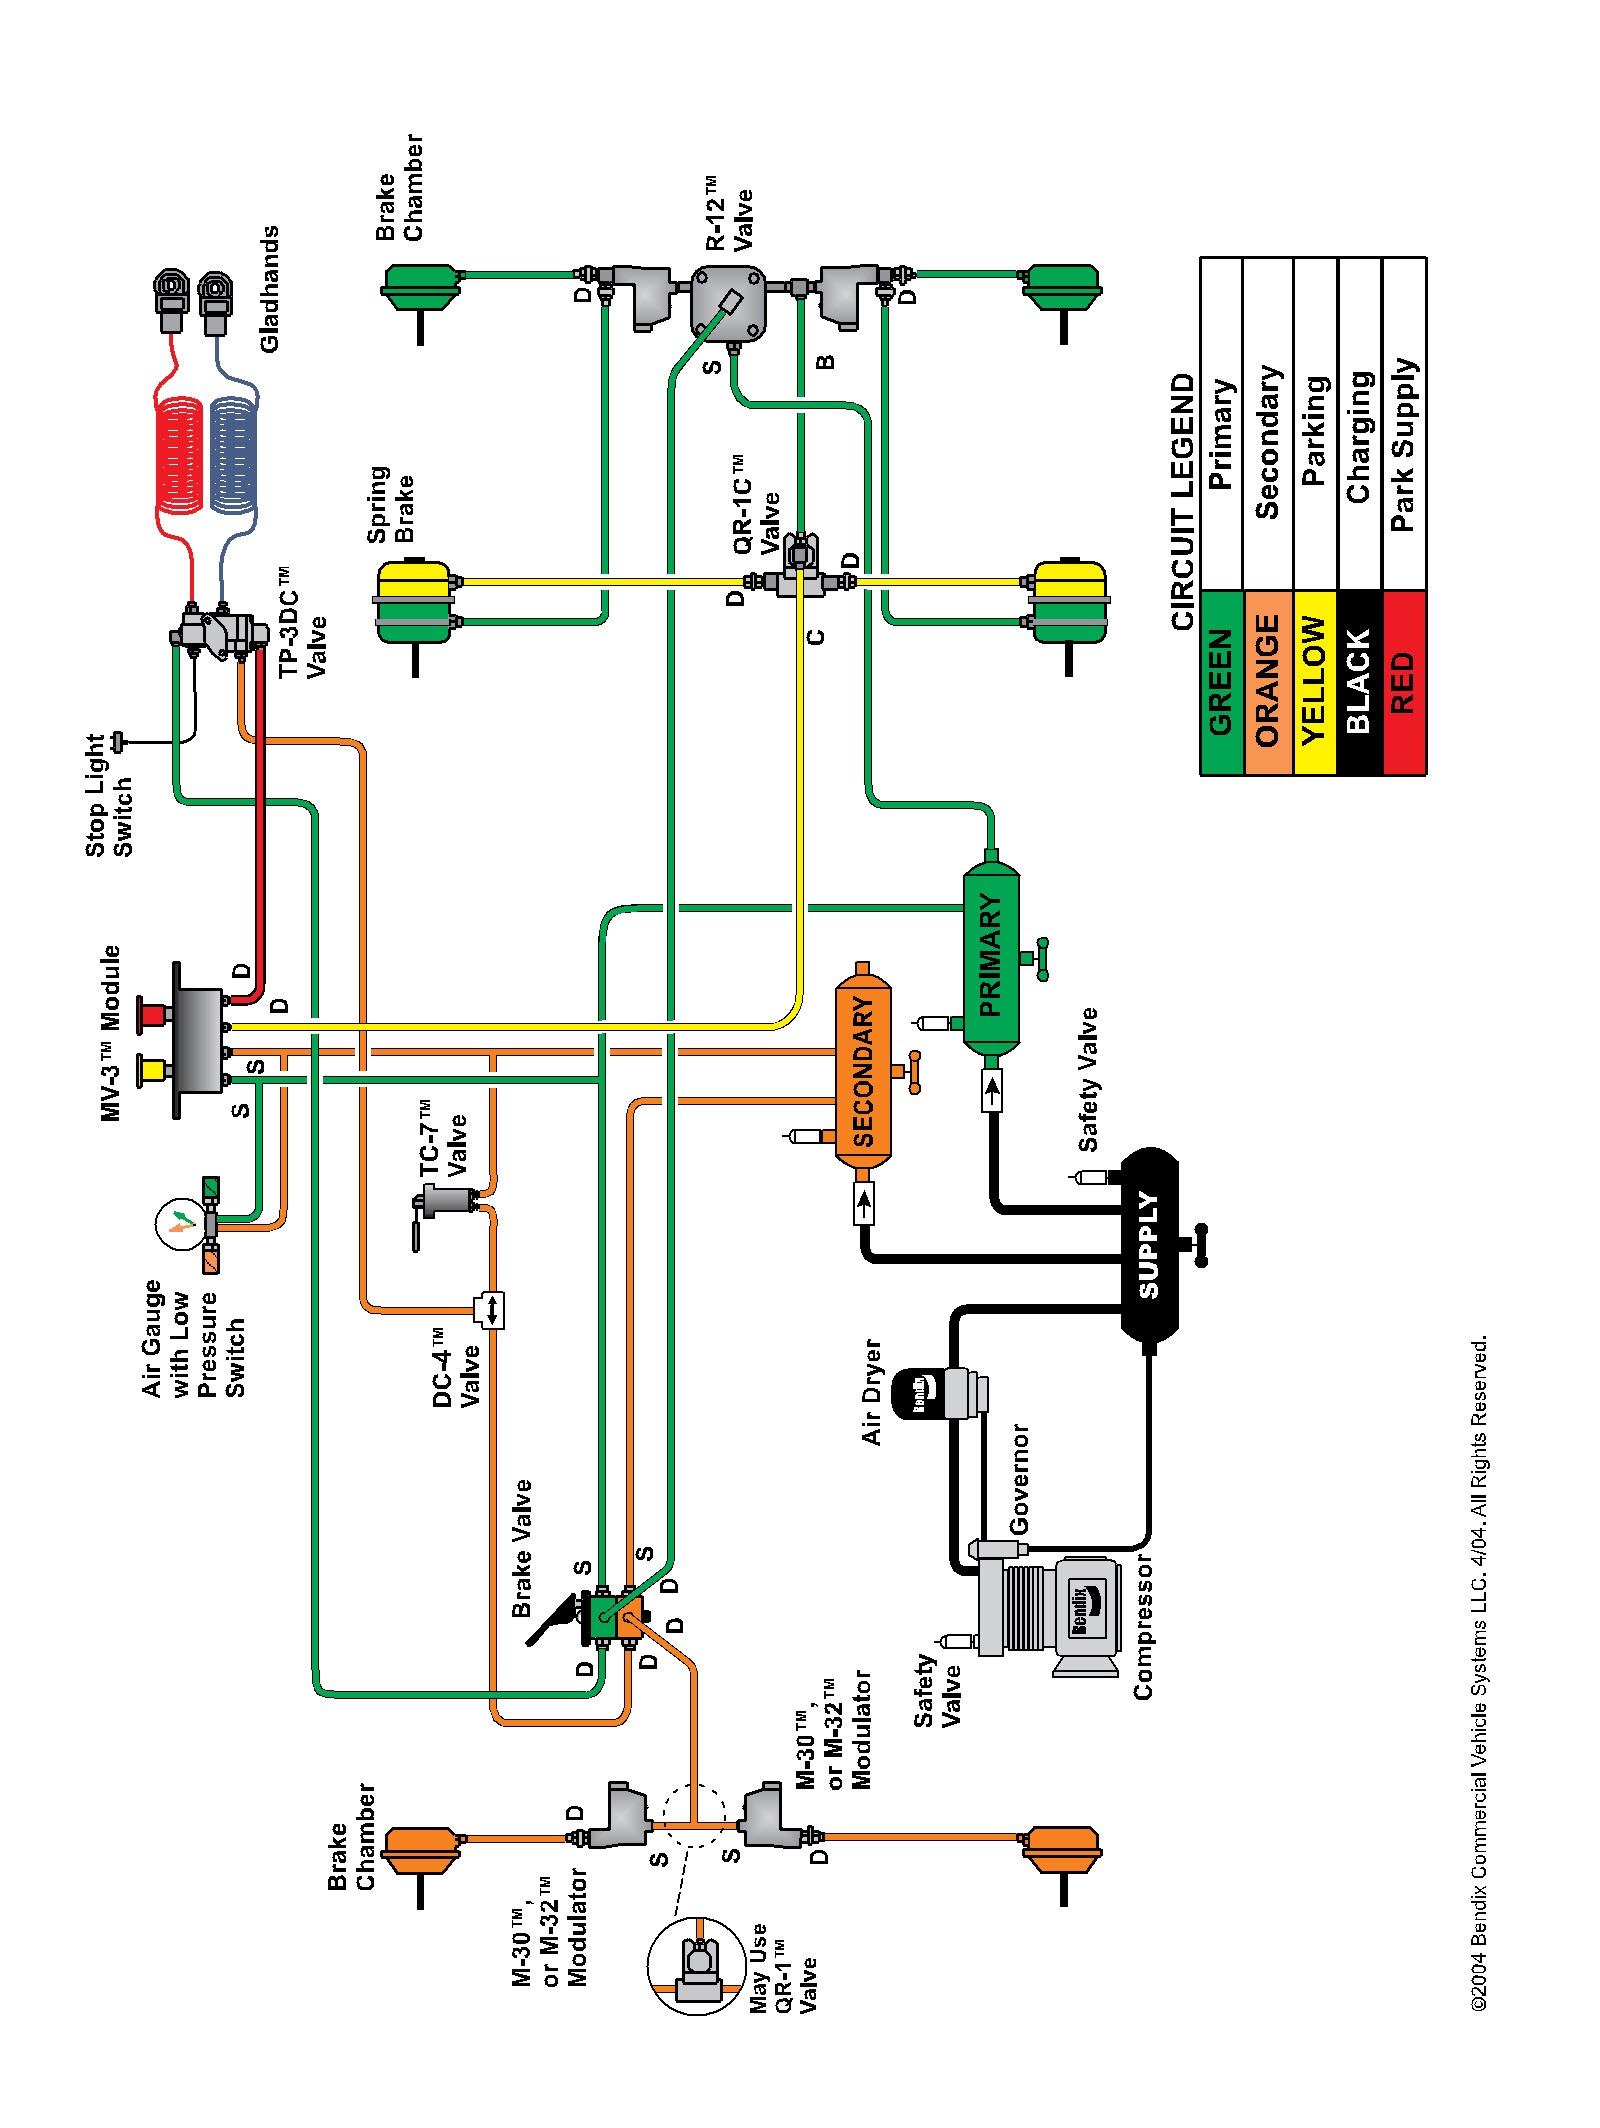 Car Brakes Diagram Management Unit Diagrams Besides Freightliner M2 Amu Wiring Of Car Brakes Diagram